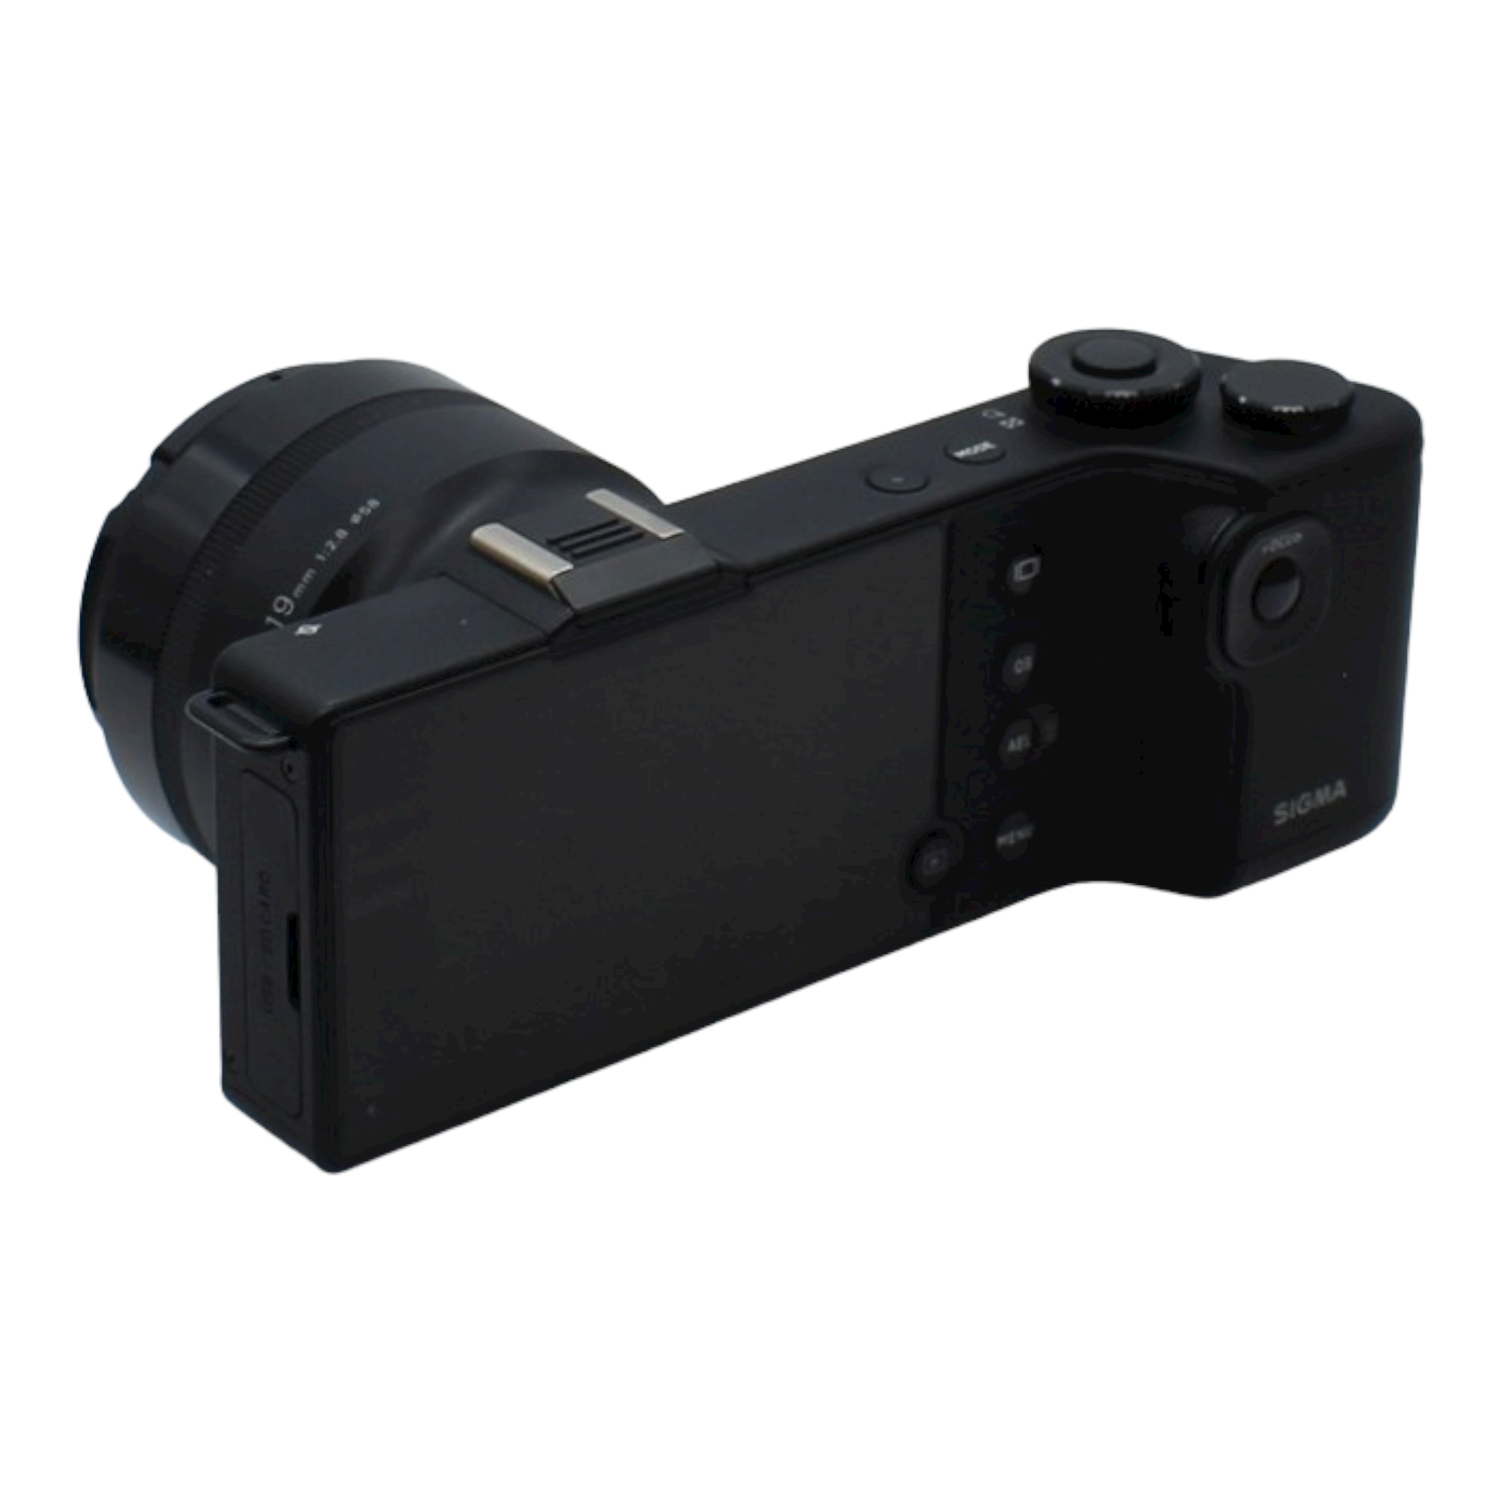 Refurbished(Good) - Sigma Dp1 Quattro Digital Camera With 19mm F2